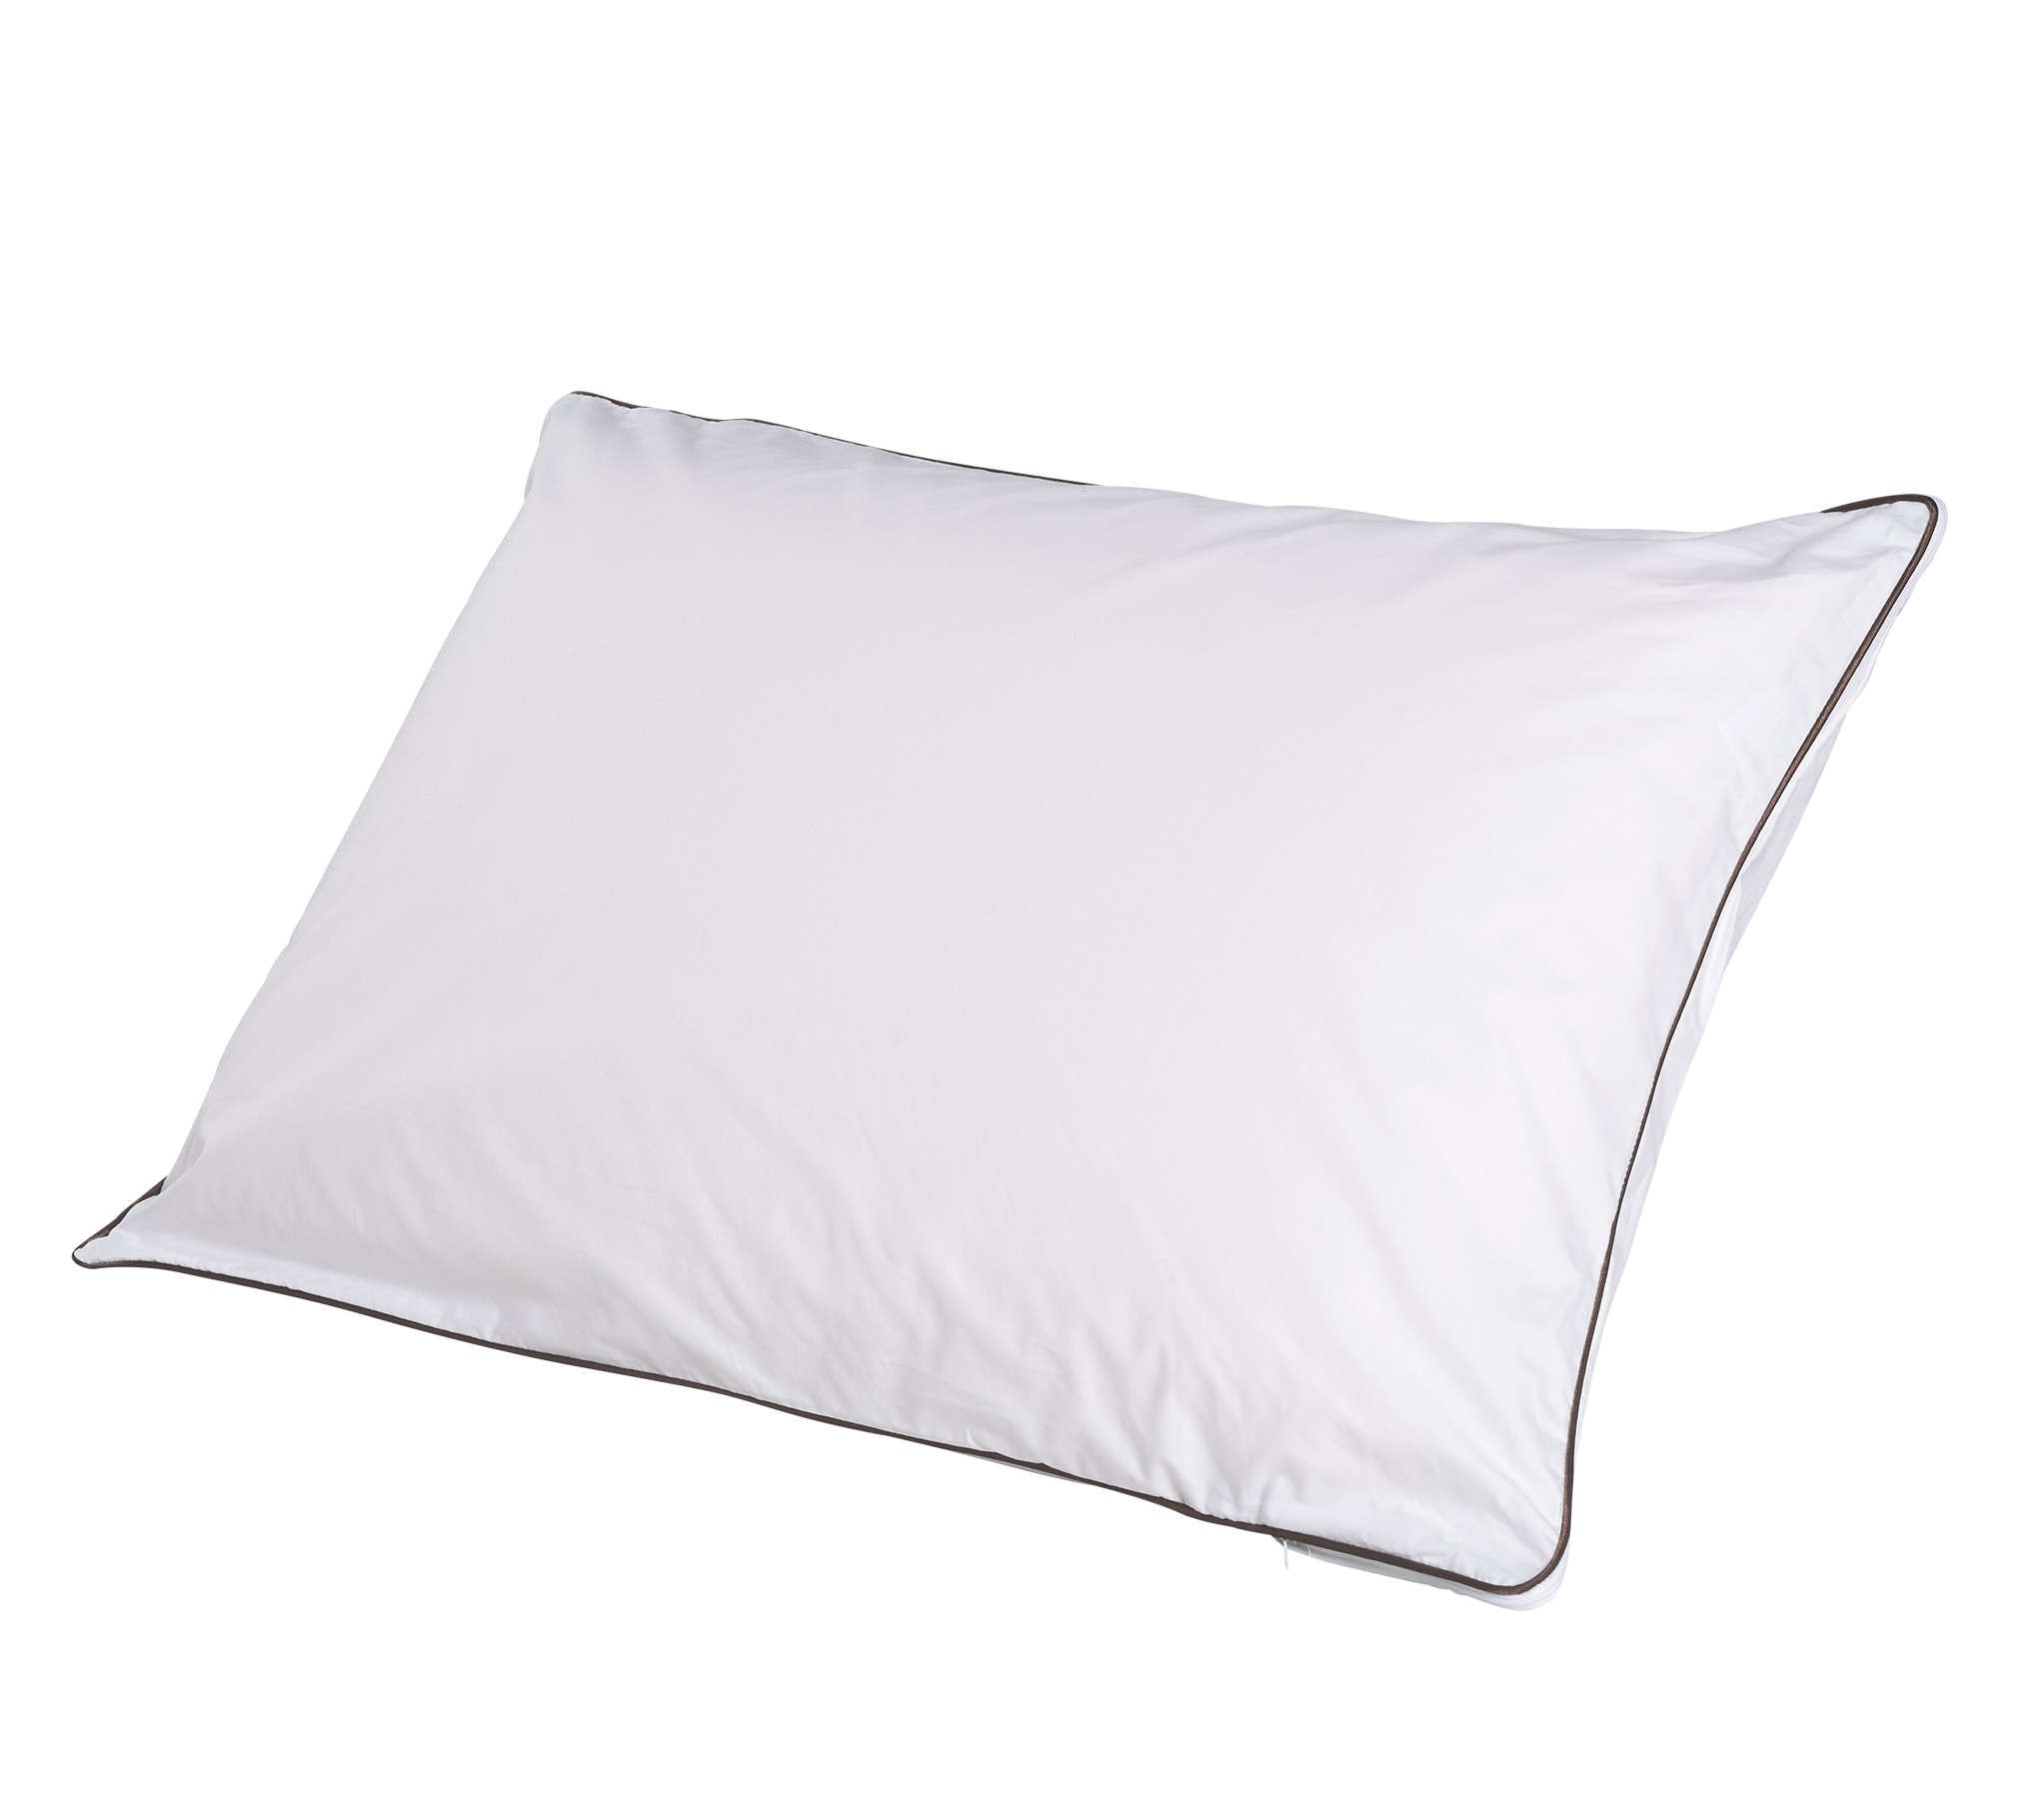 L'oreiller plat carré - 60 x 60 cm - naturel